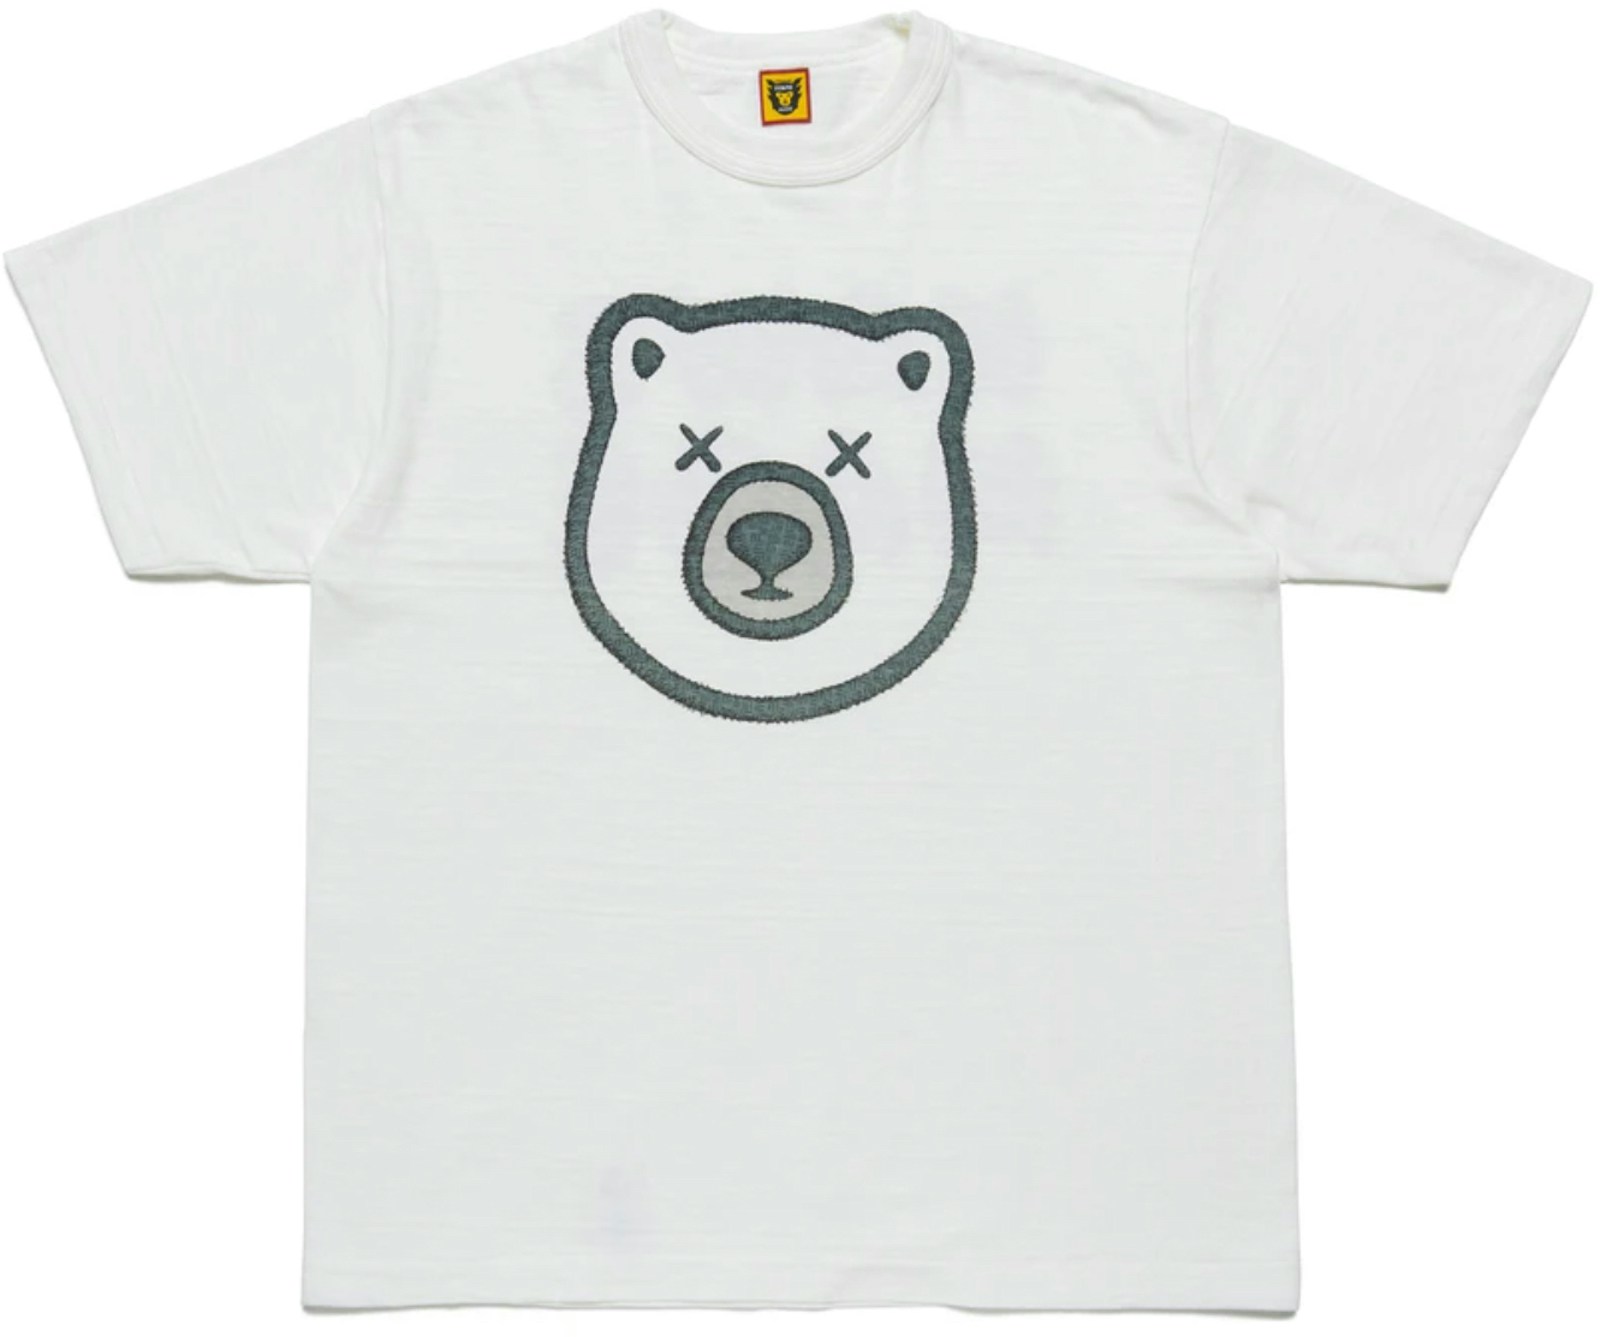 Human Made x KAWS #5 T-shirt White - SS21